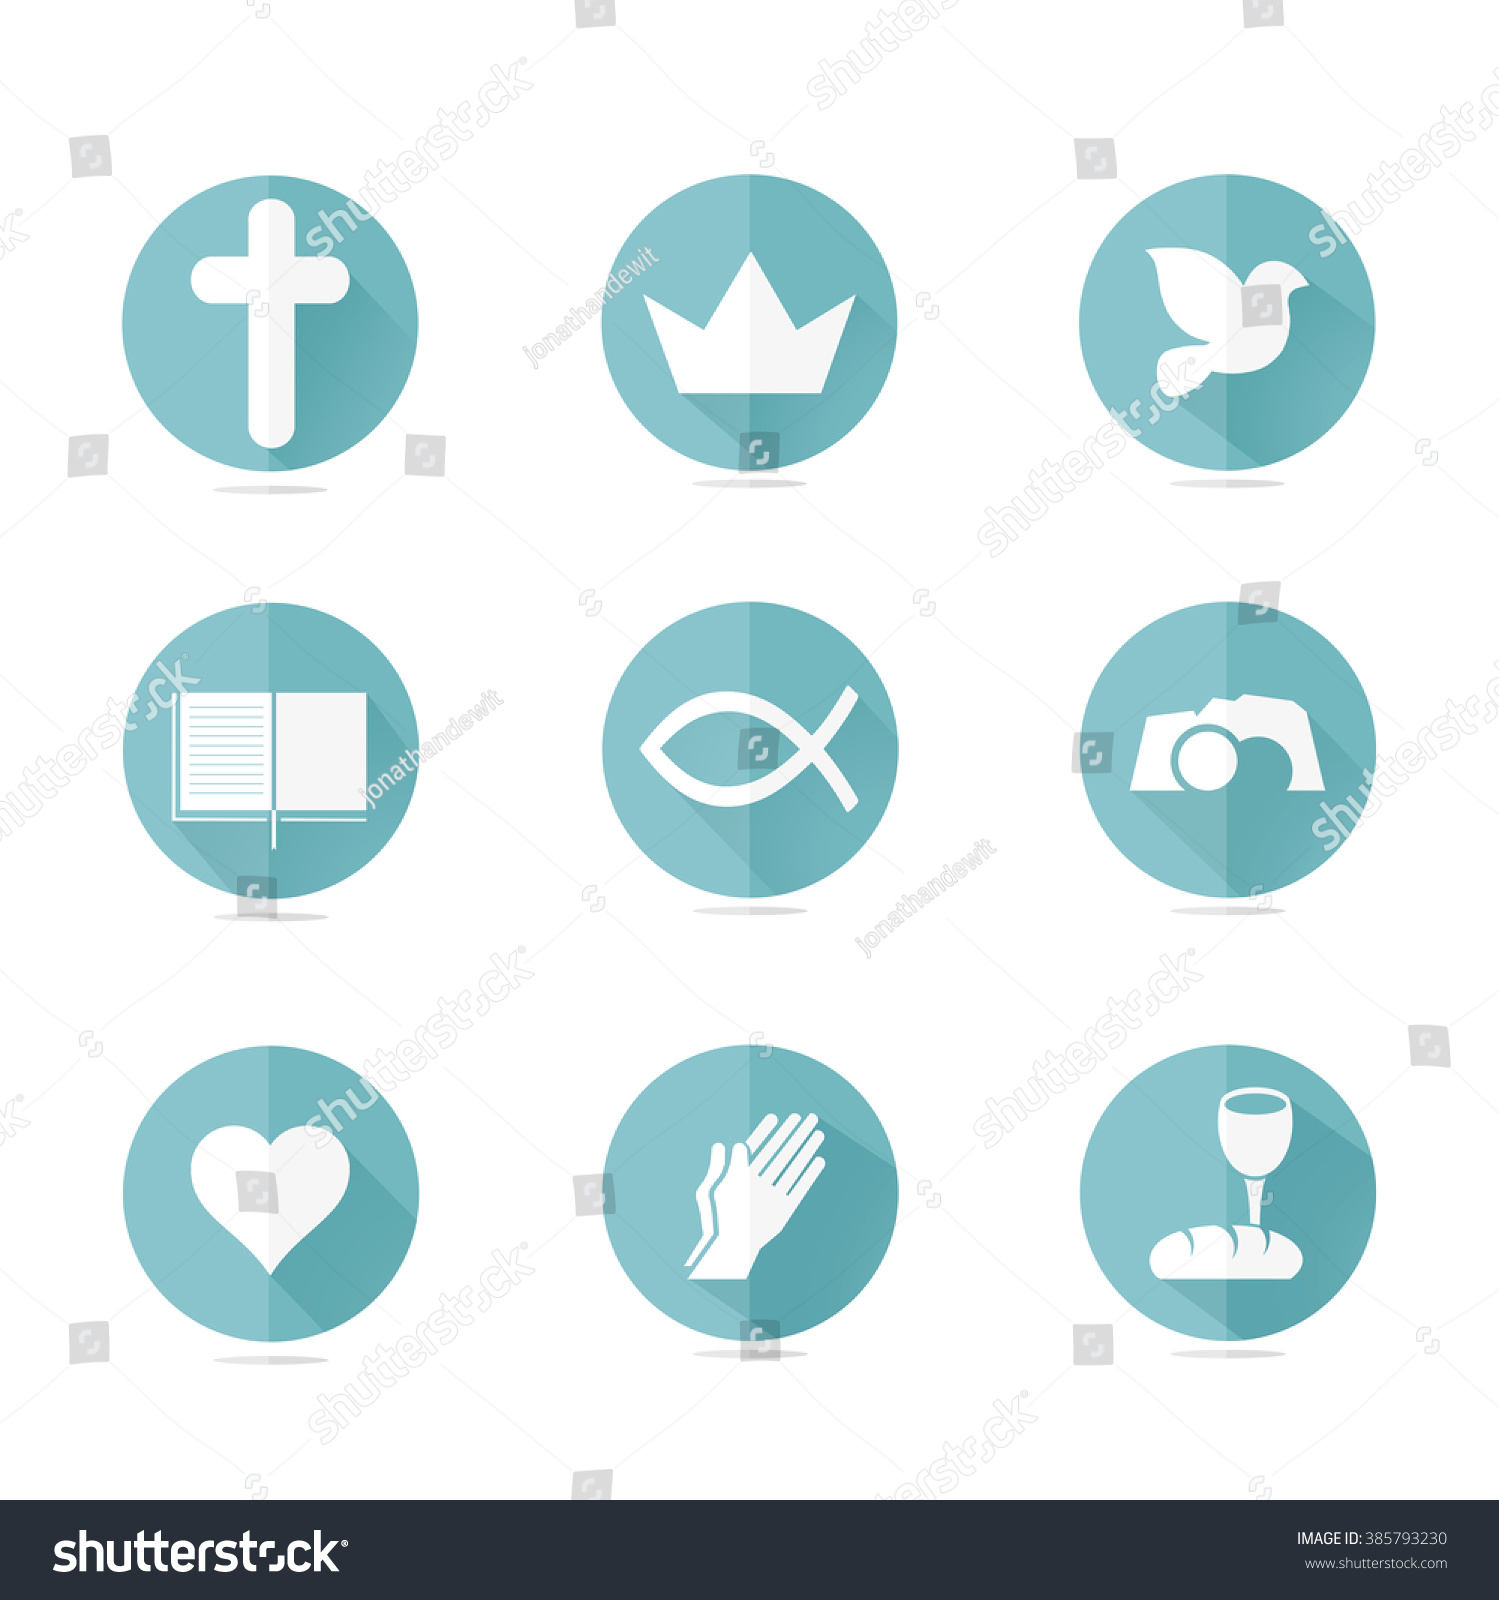 Christian Symbols Stock Photo 385793230 : Shutterstock